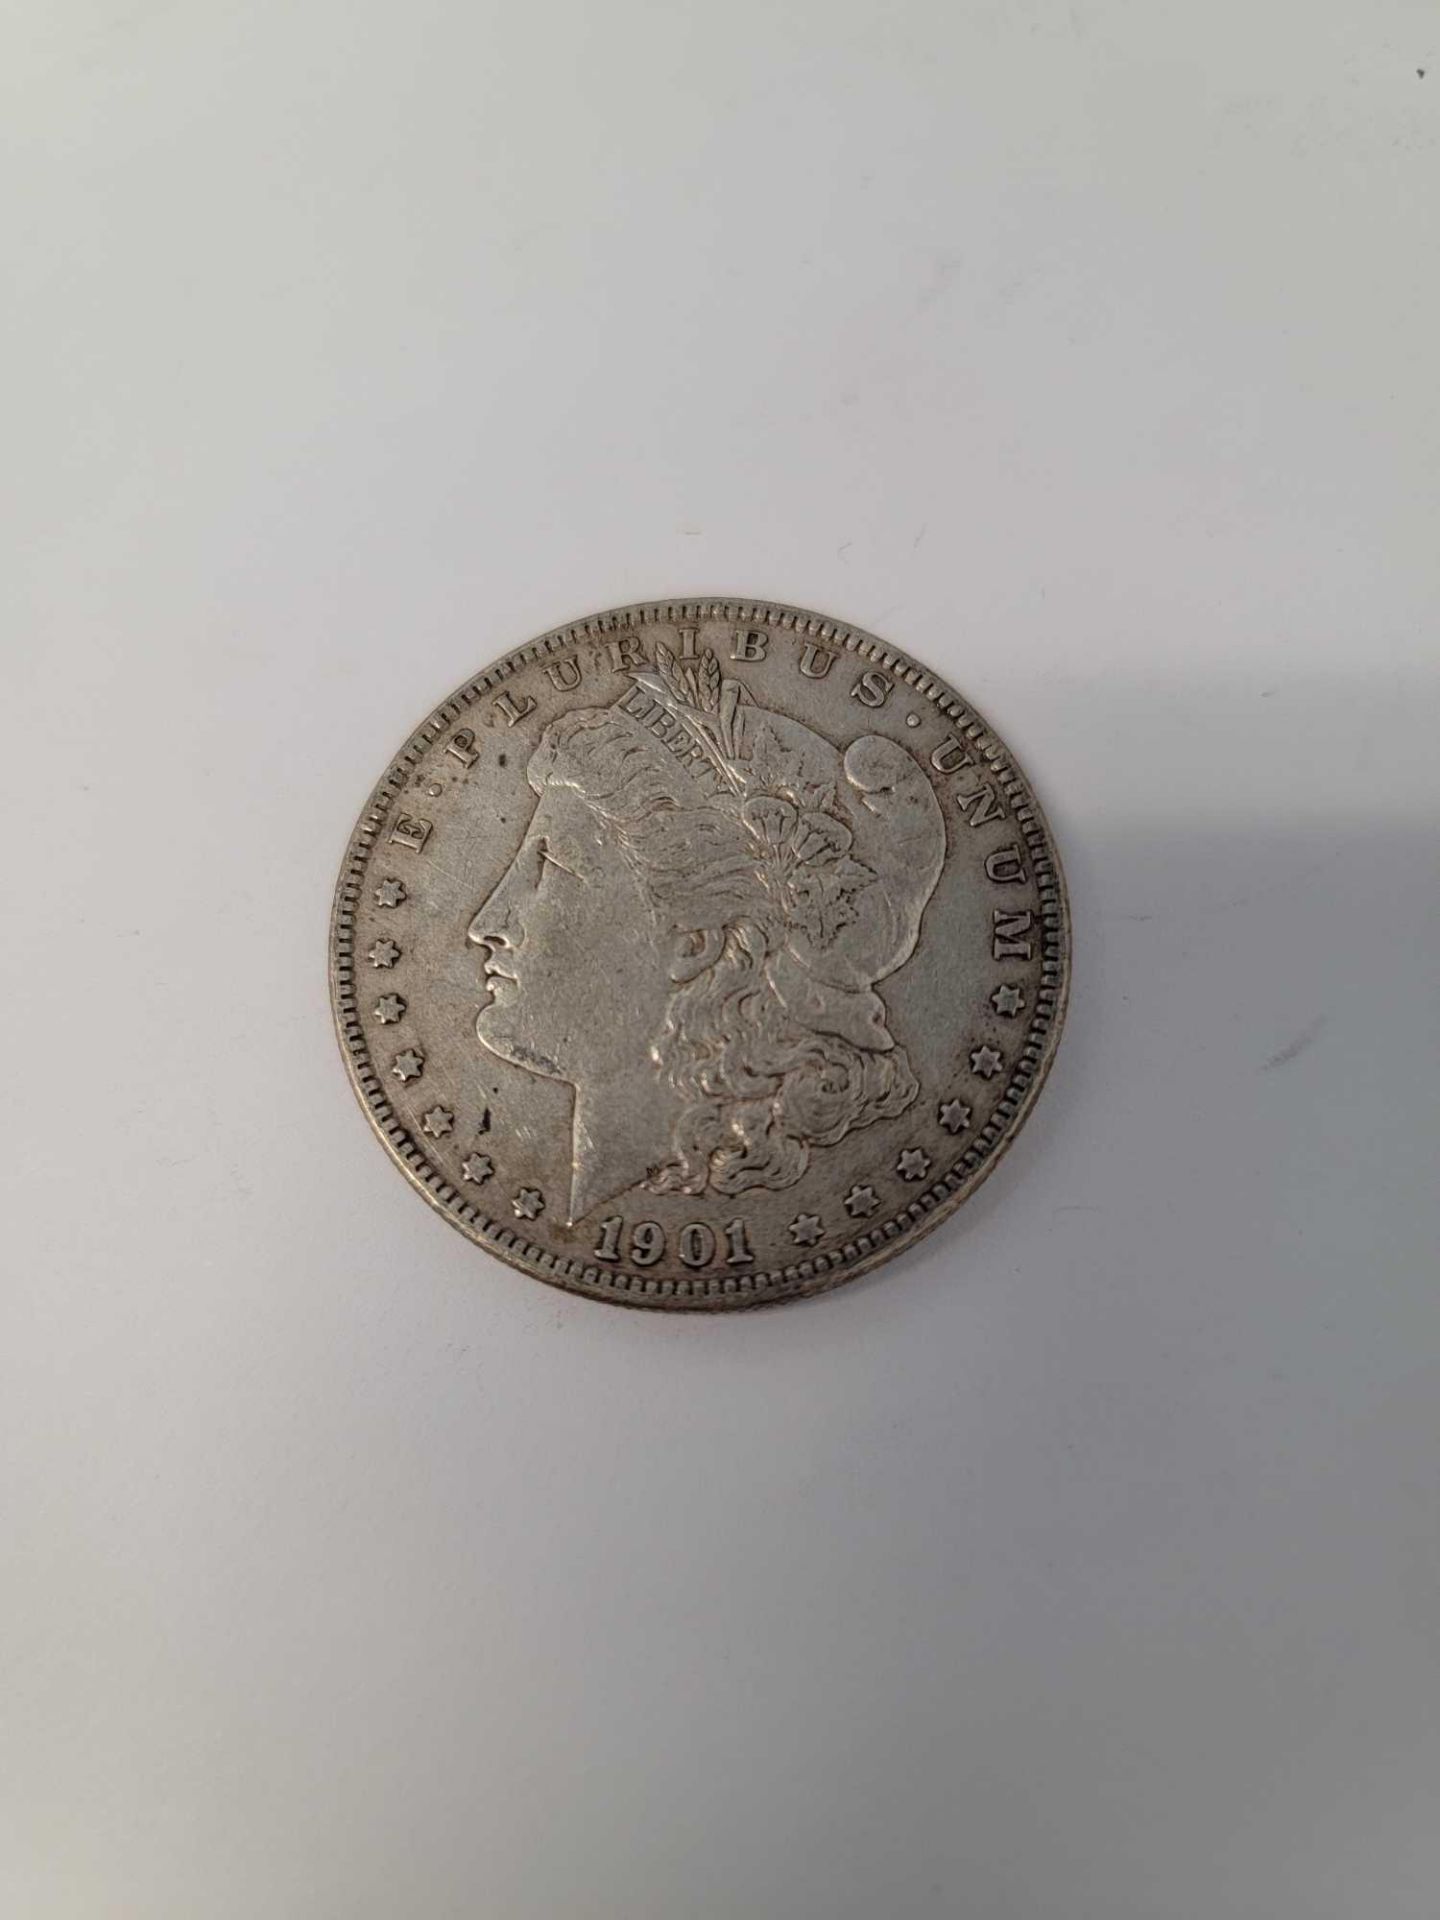 1901 Morgan Dollar